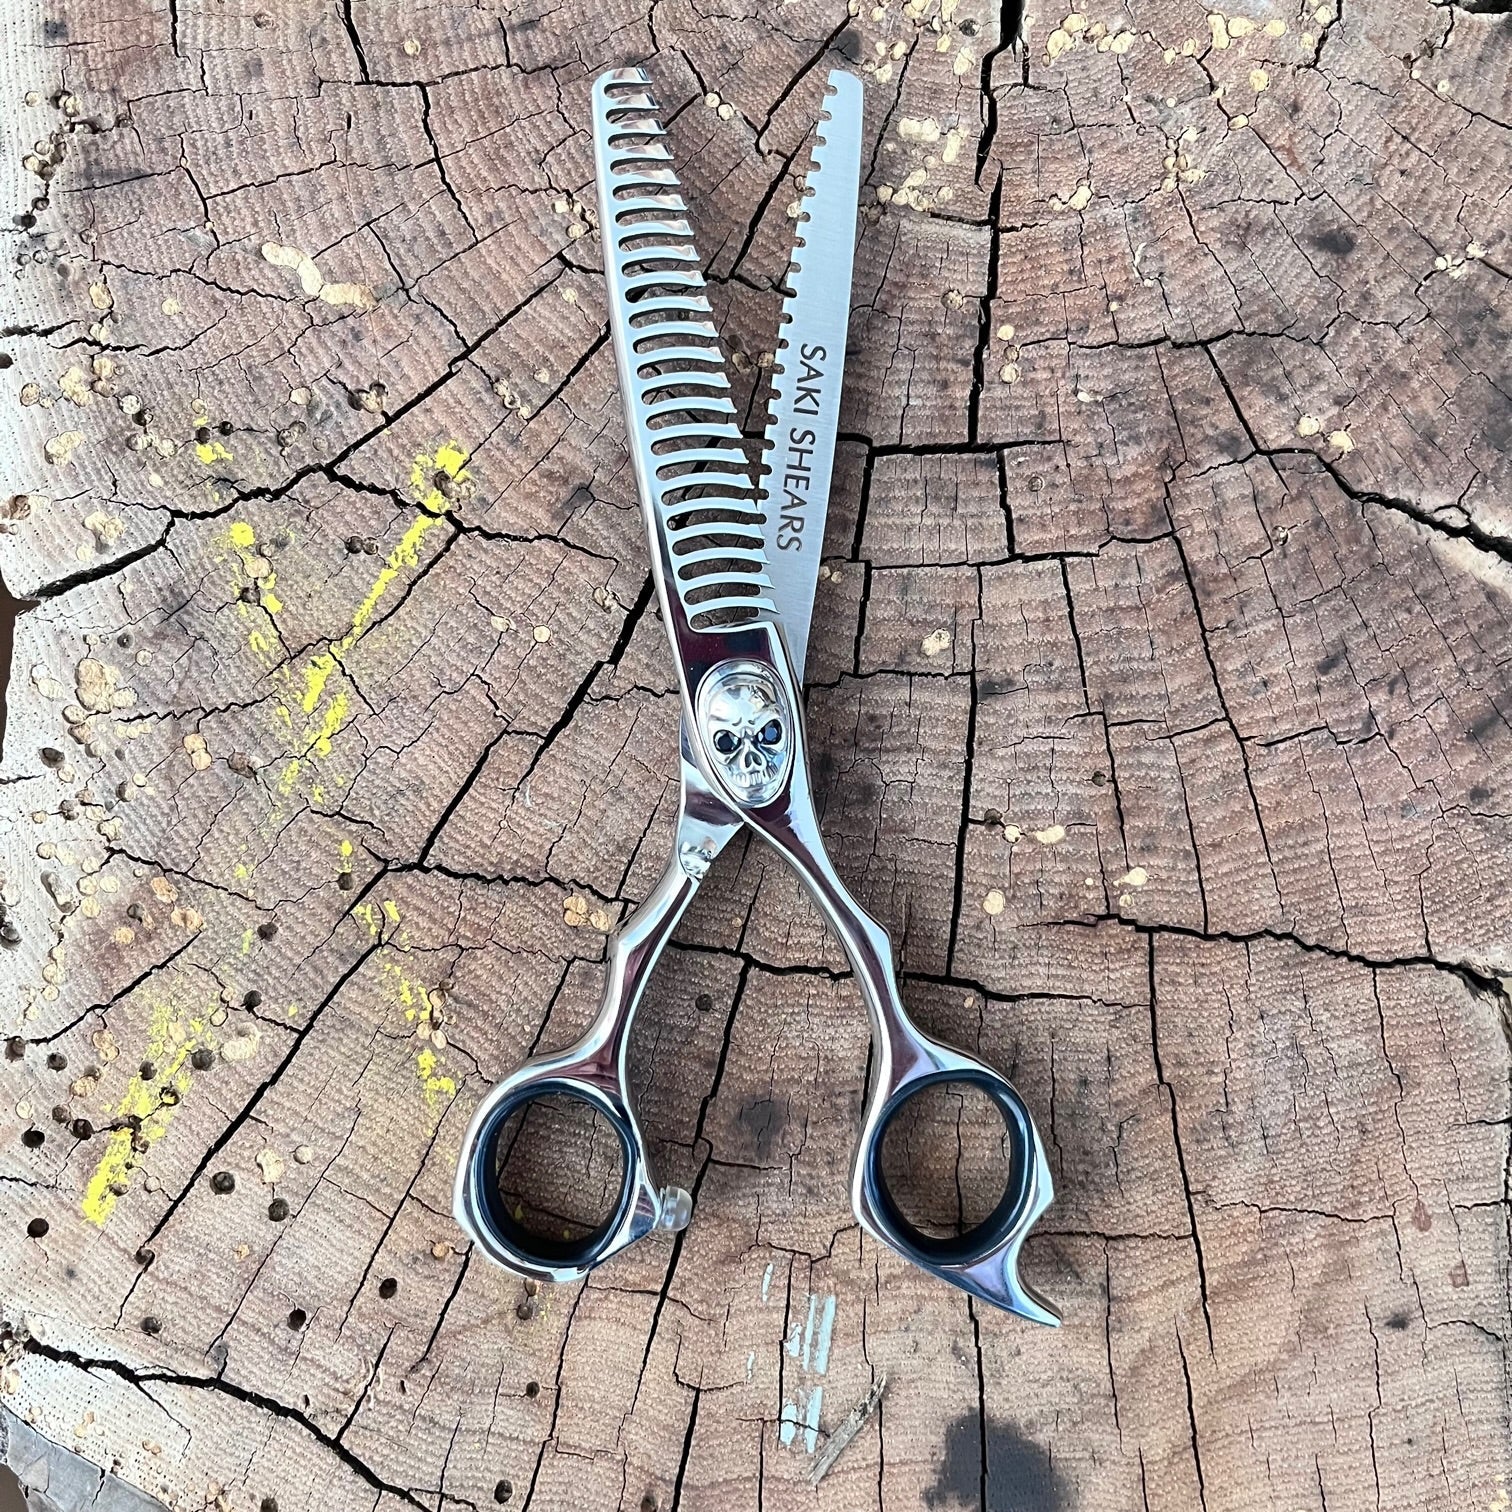 Tachi Barber Thinning Shears/Scissors